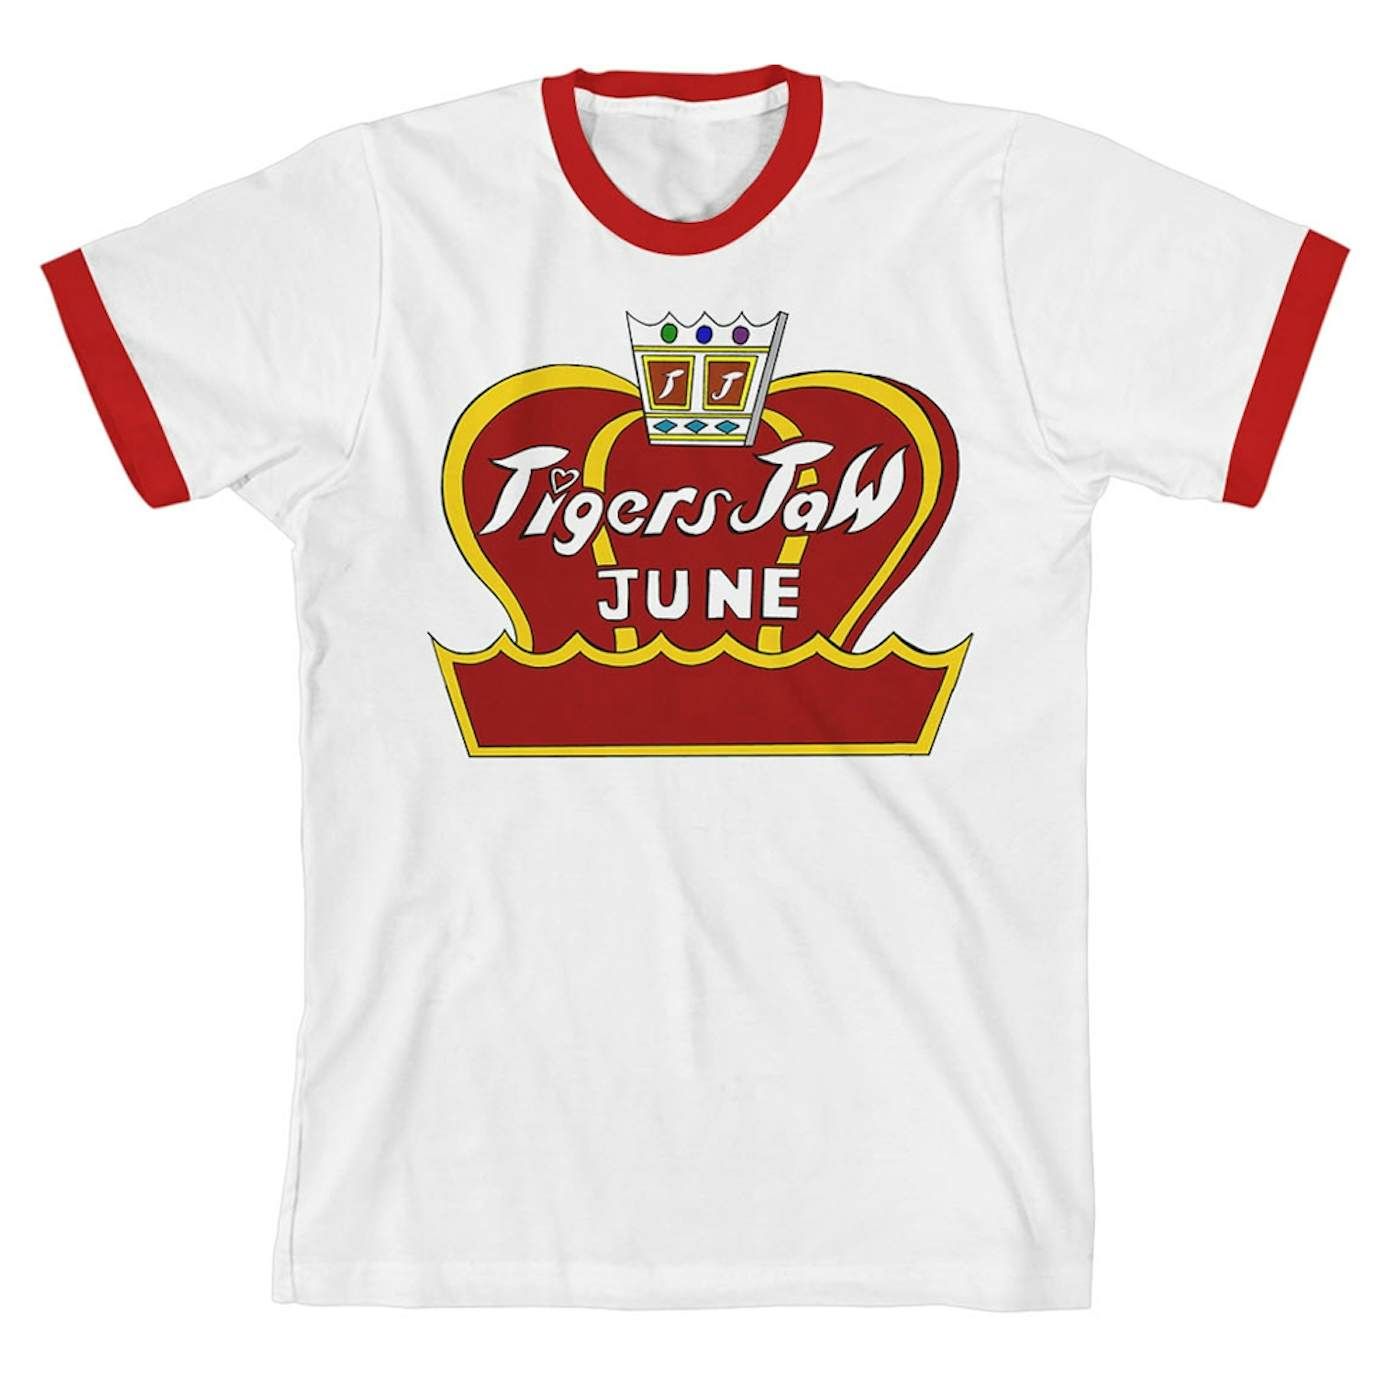 Tigers Jaw June Ringer Shirt